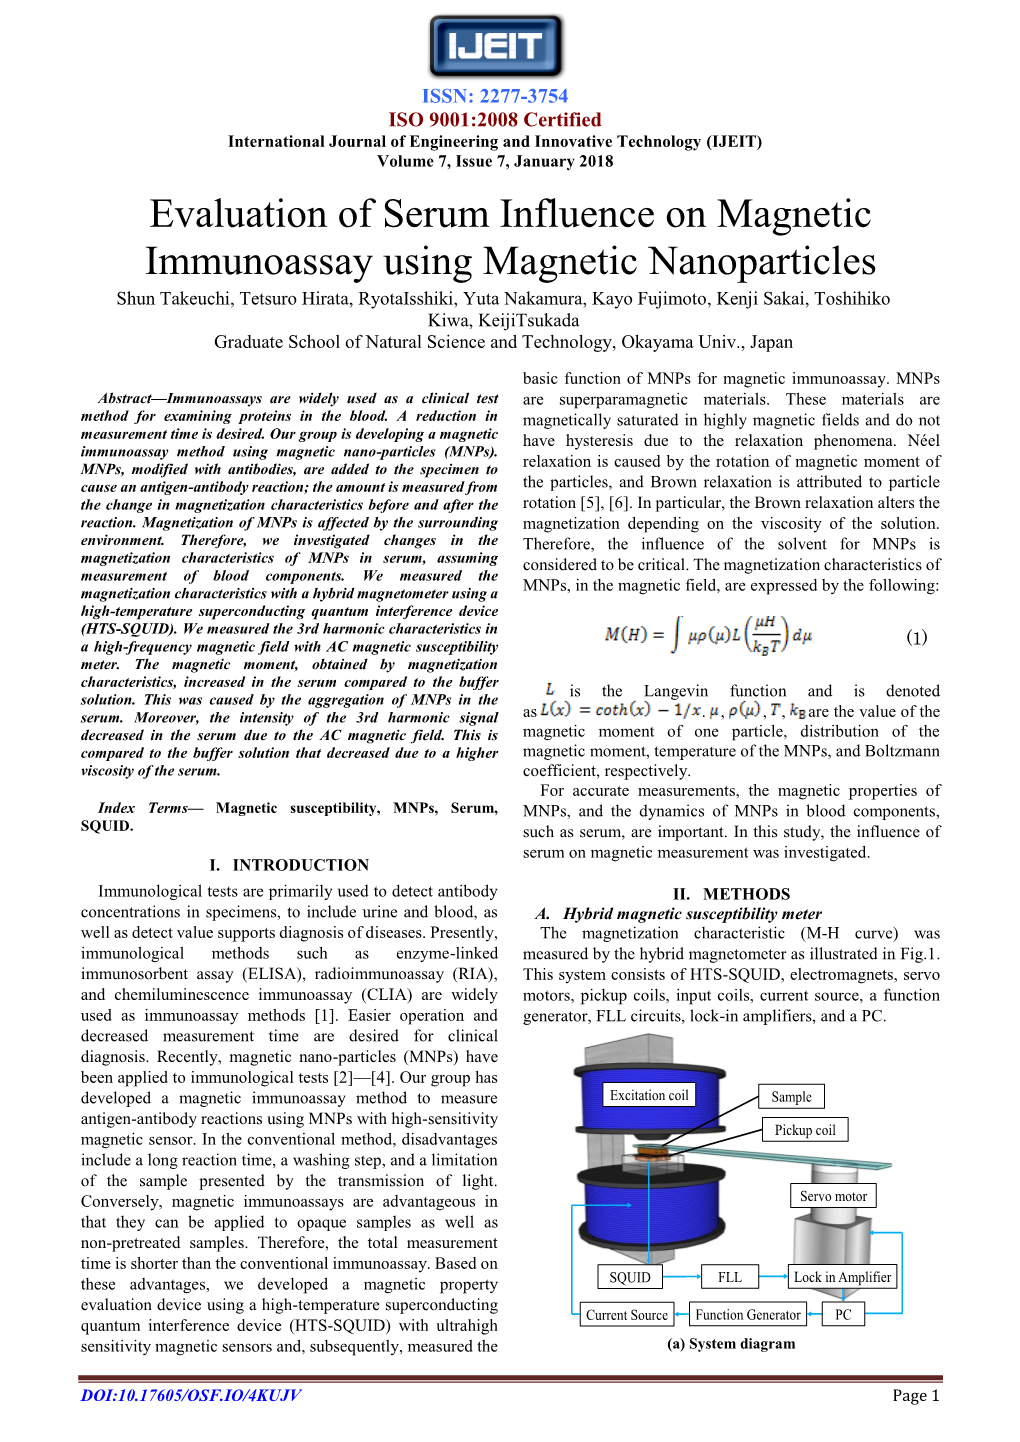 Evaluation of Serum Influence on Magnetic Immunoassay Using